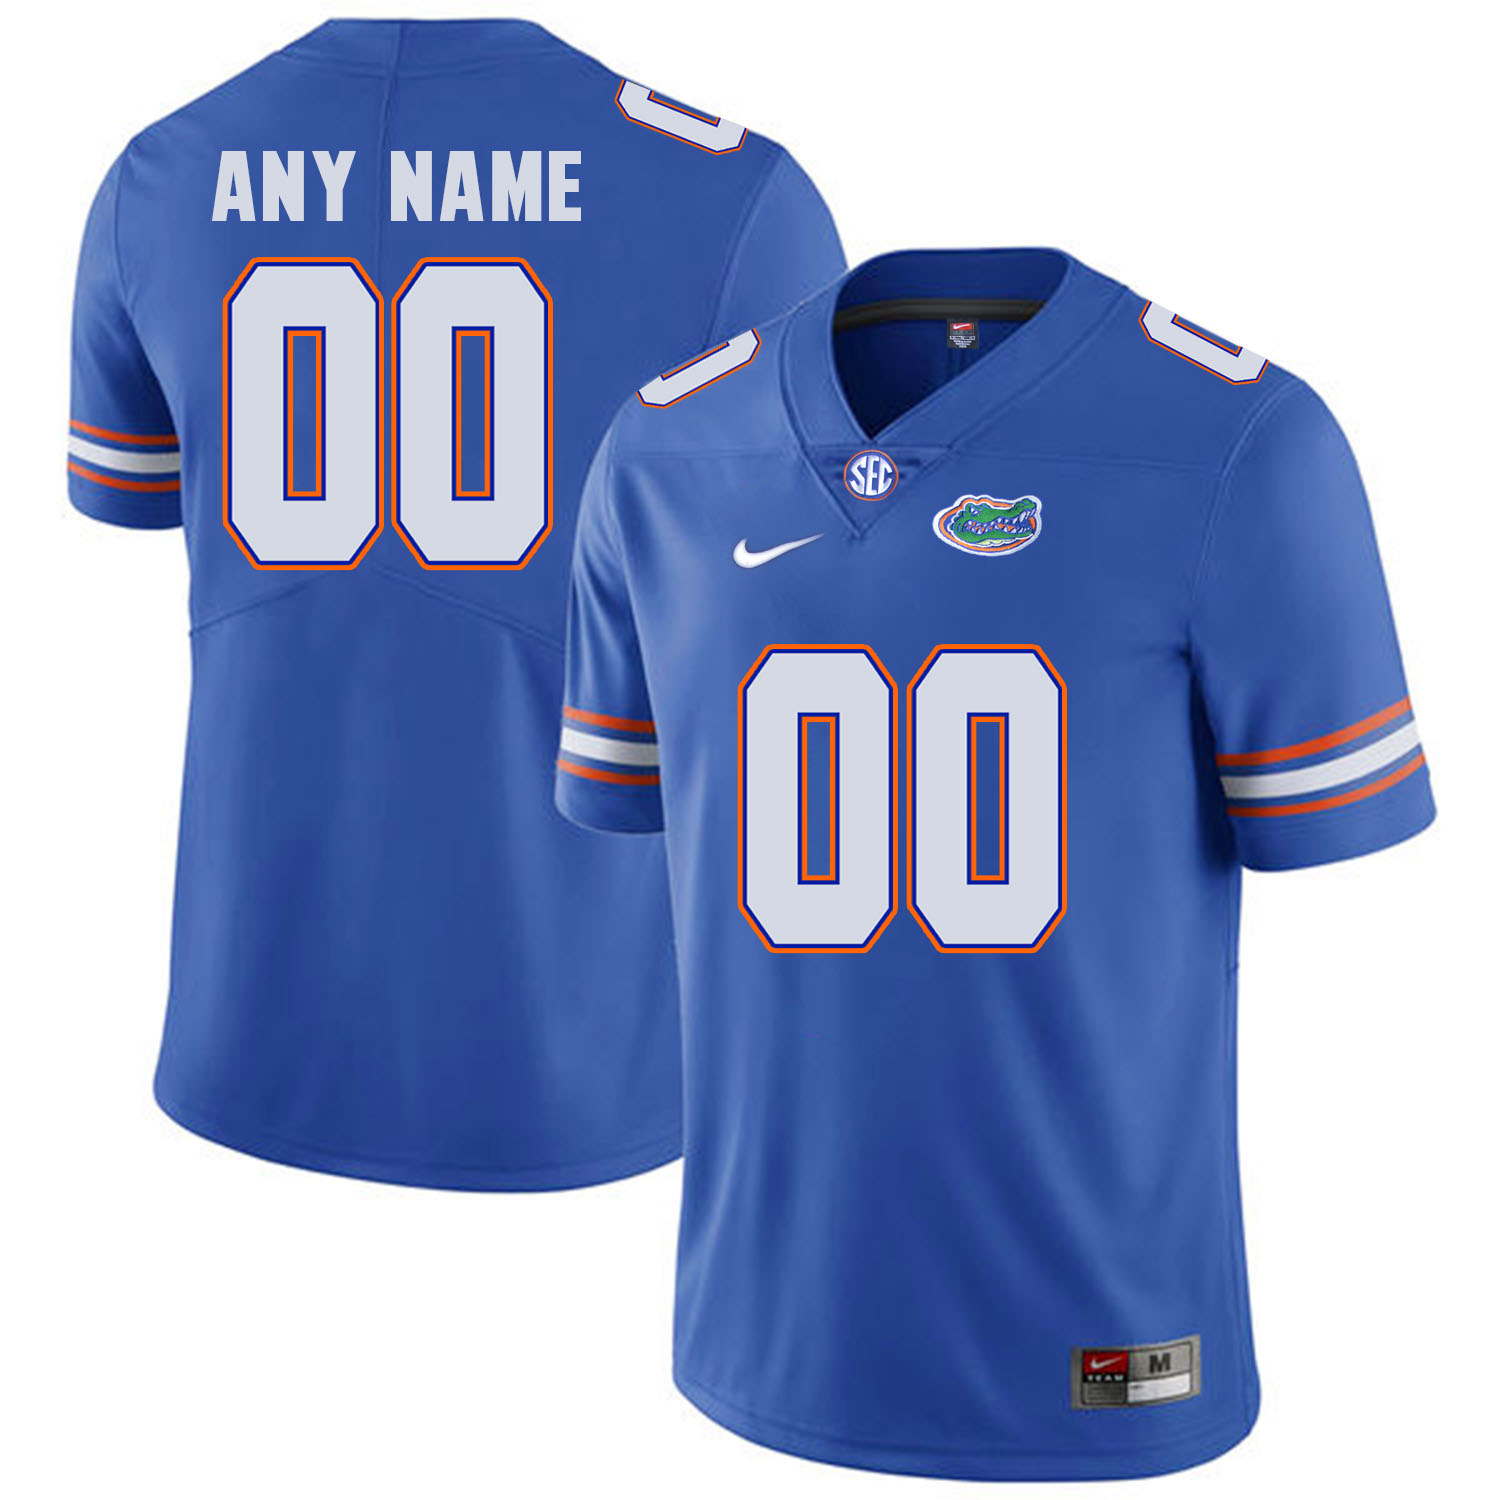 Florida Gators Men's Blue Customized College Football Jersey